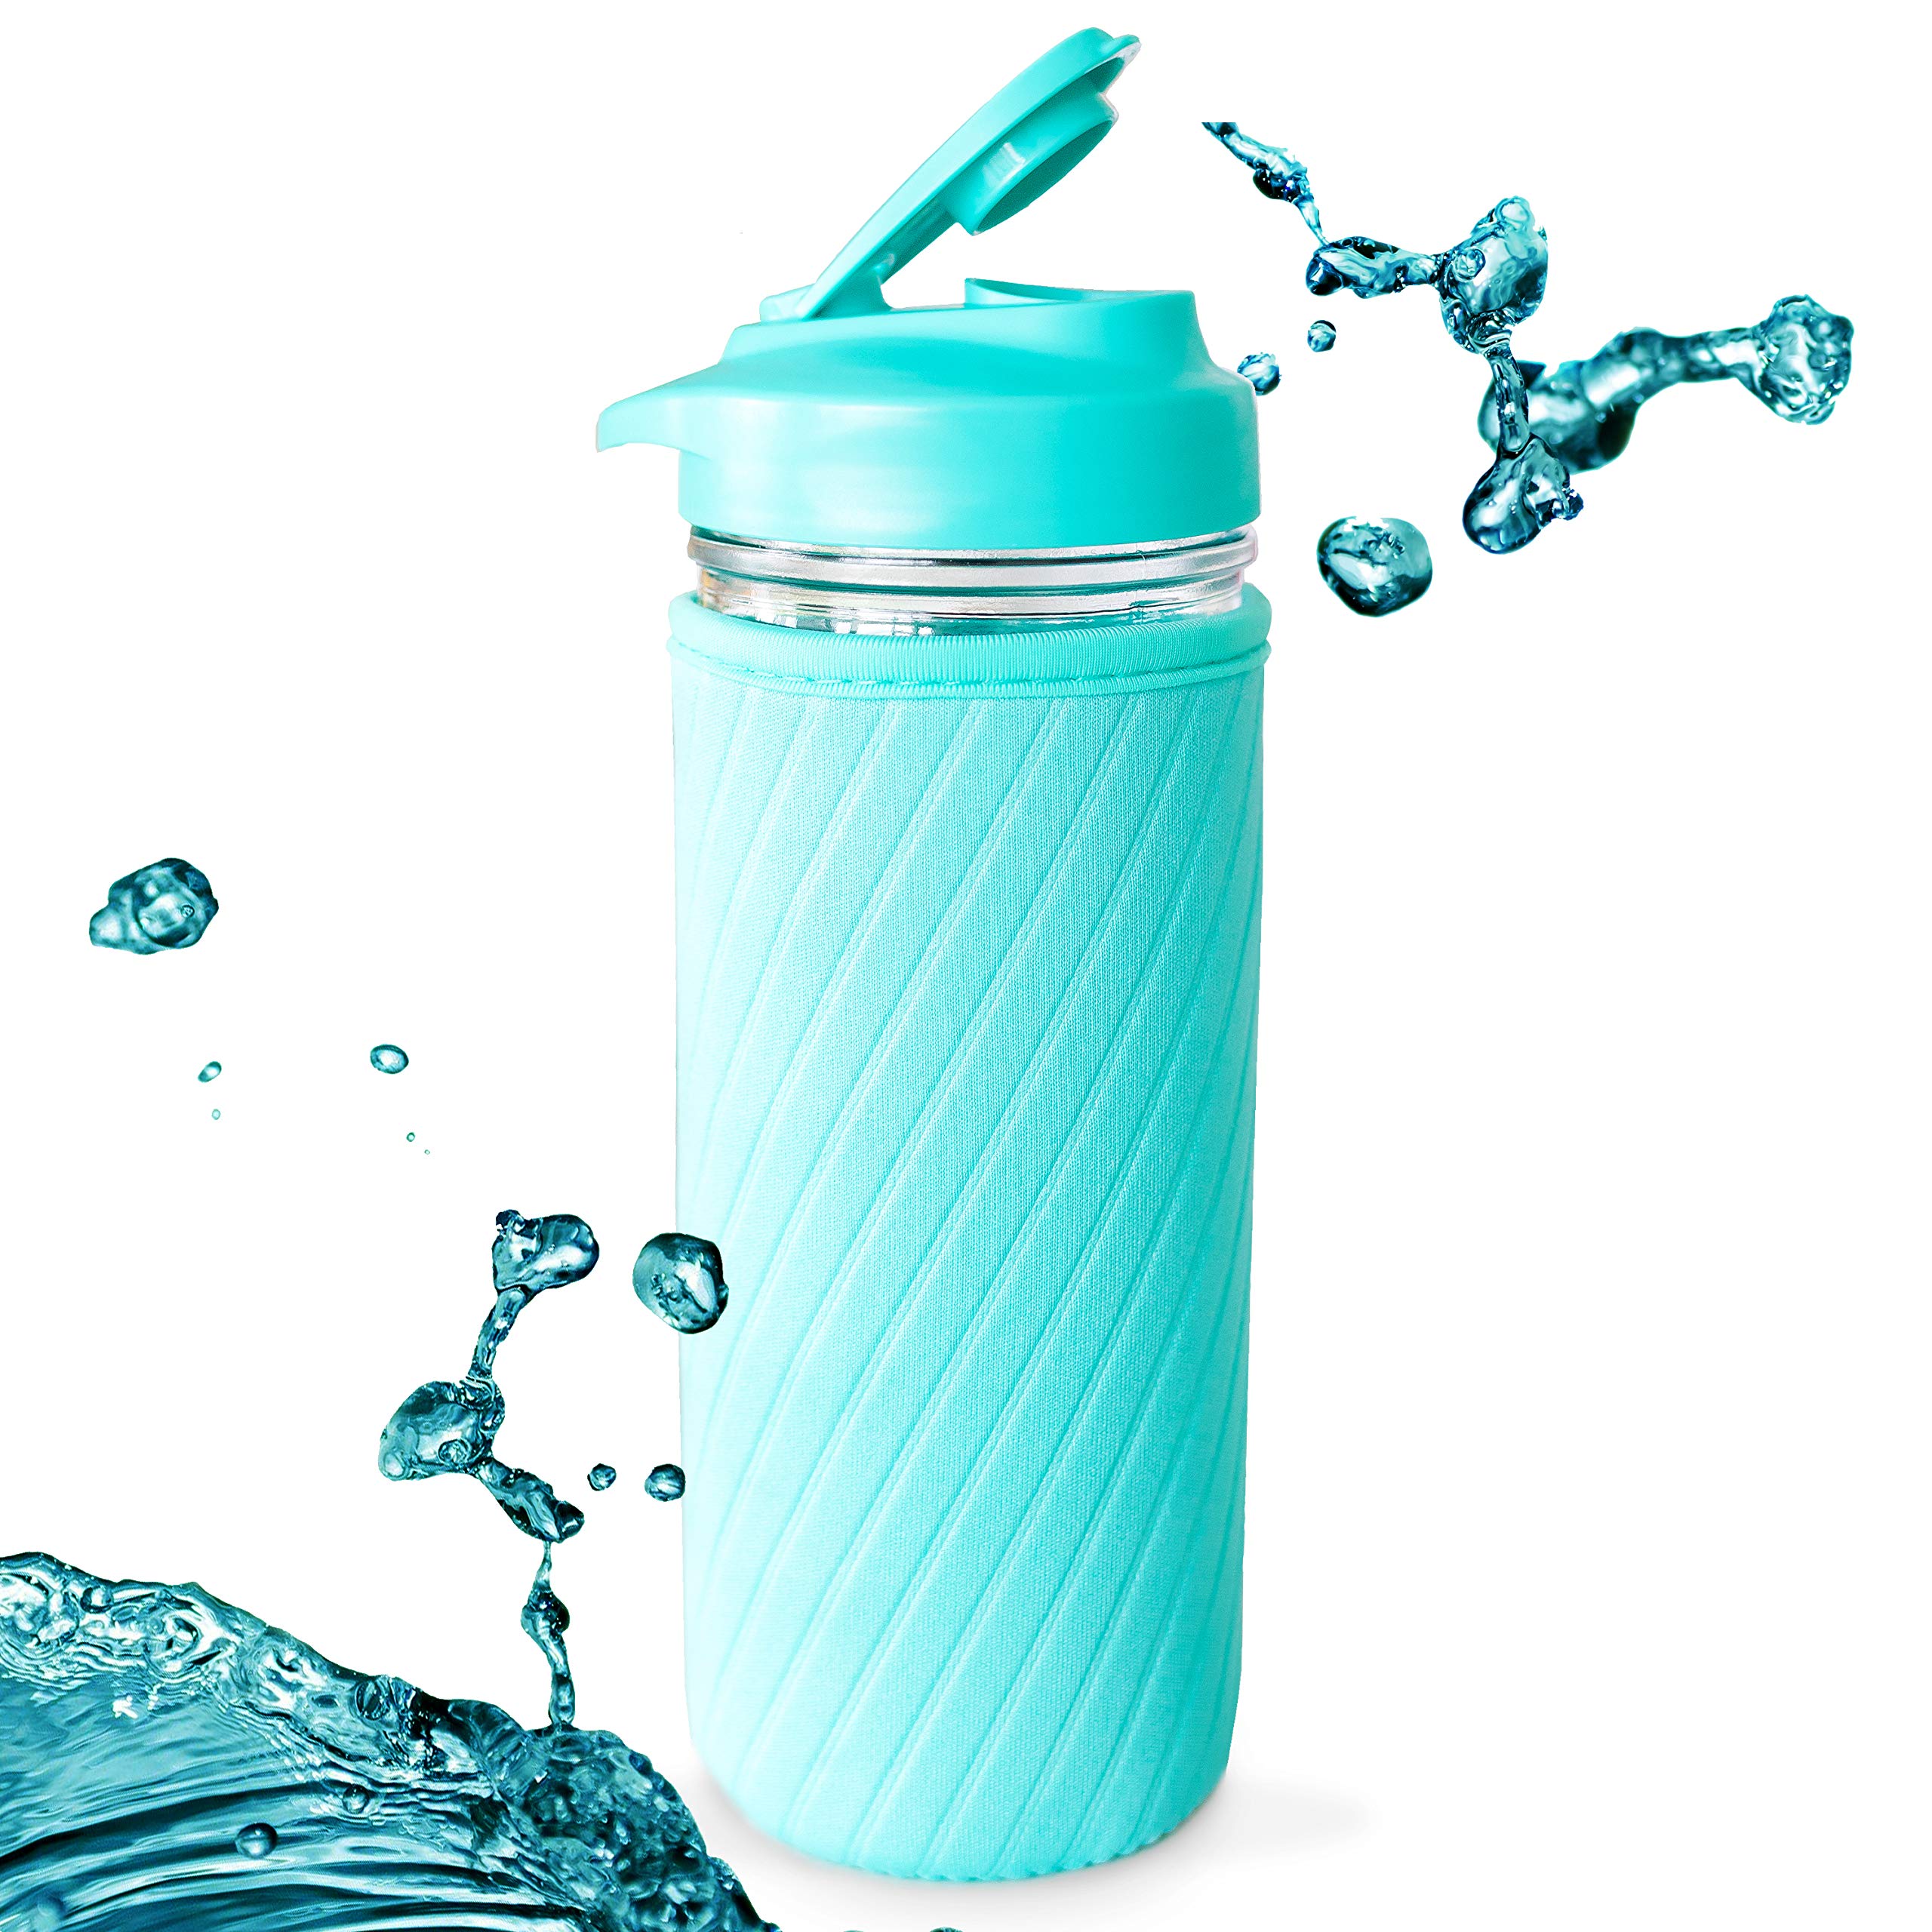 Masontops 3 Pc Mason Jar Water Bottle Set - 1 X 16 oz Regular Mouth Jar - 1 Turquoise Insulator Sleeve - 1 Turquoise Drinking Li